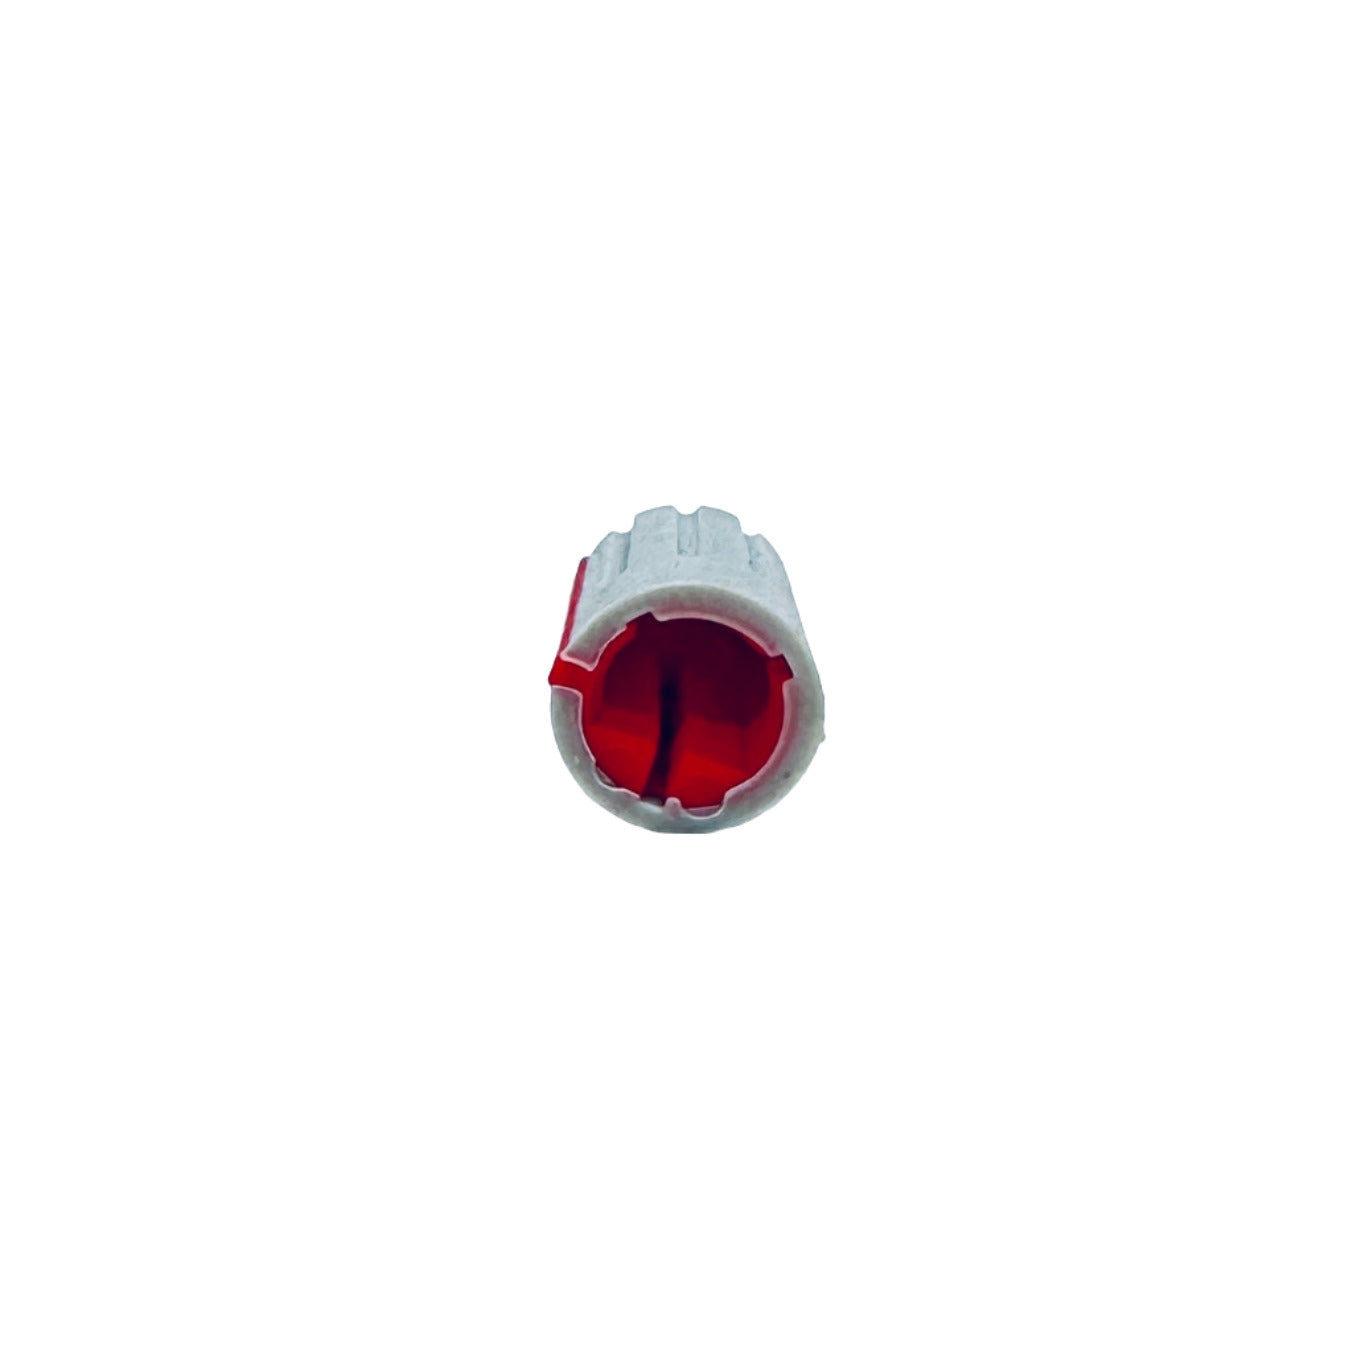 Peavey 30902120 Small Grey/ Red Knob